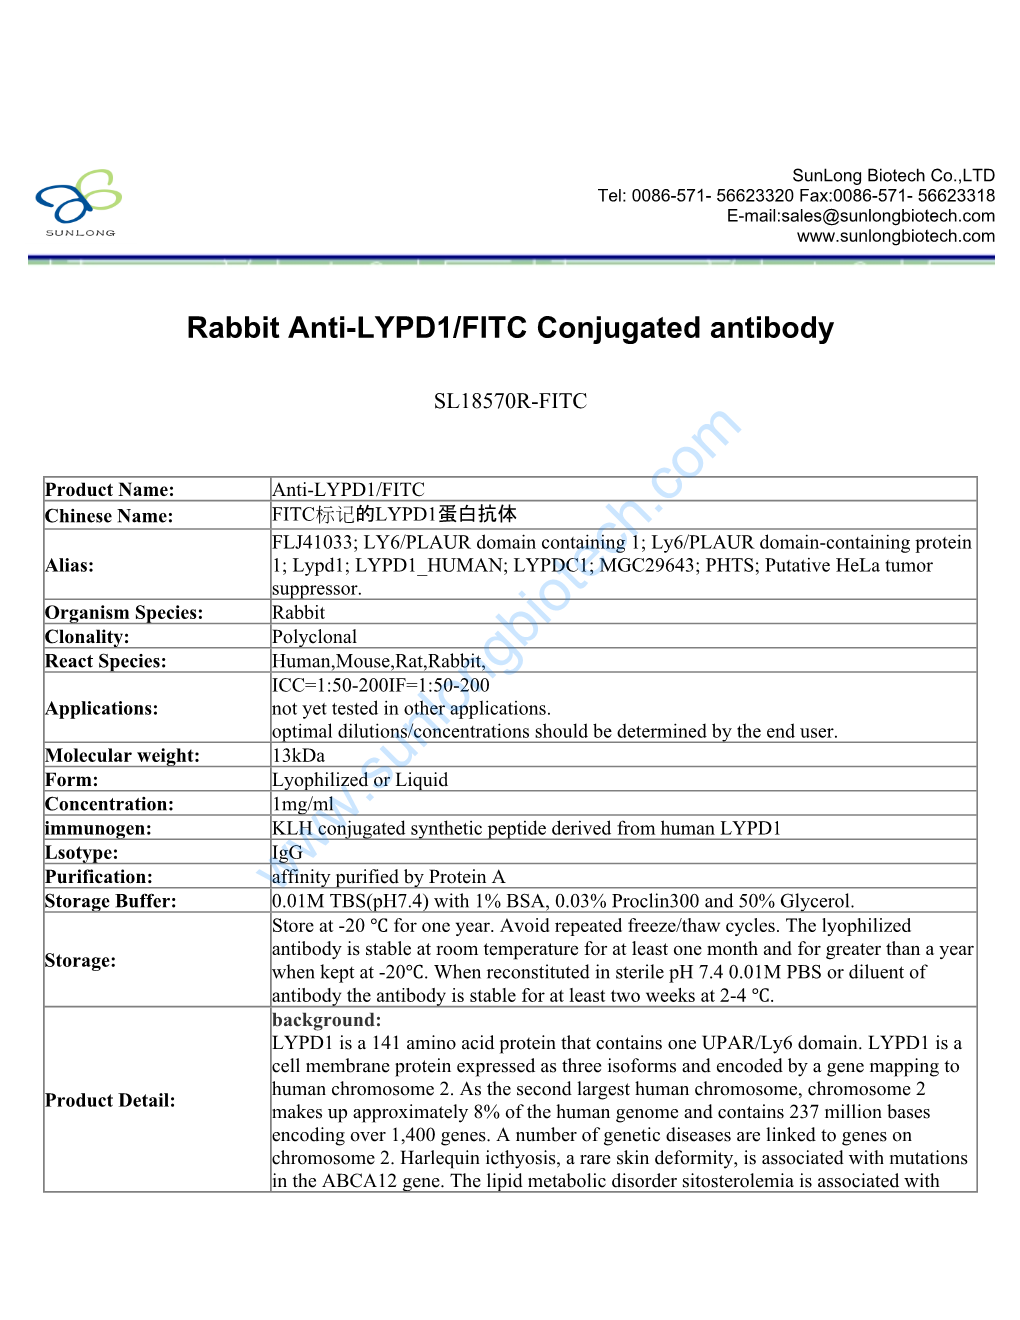 Rabbit Anti-LYPD1/FITC Conjugated Antibody-SL18570R-FITC